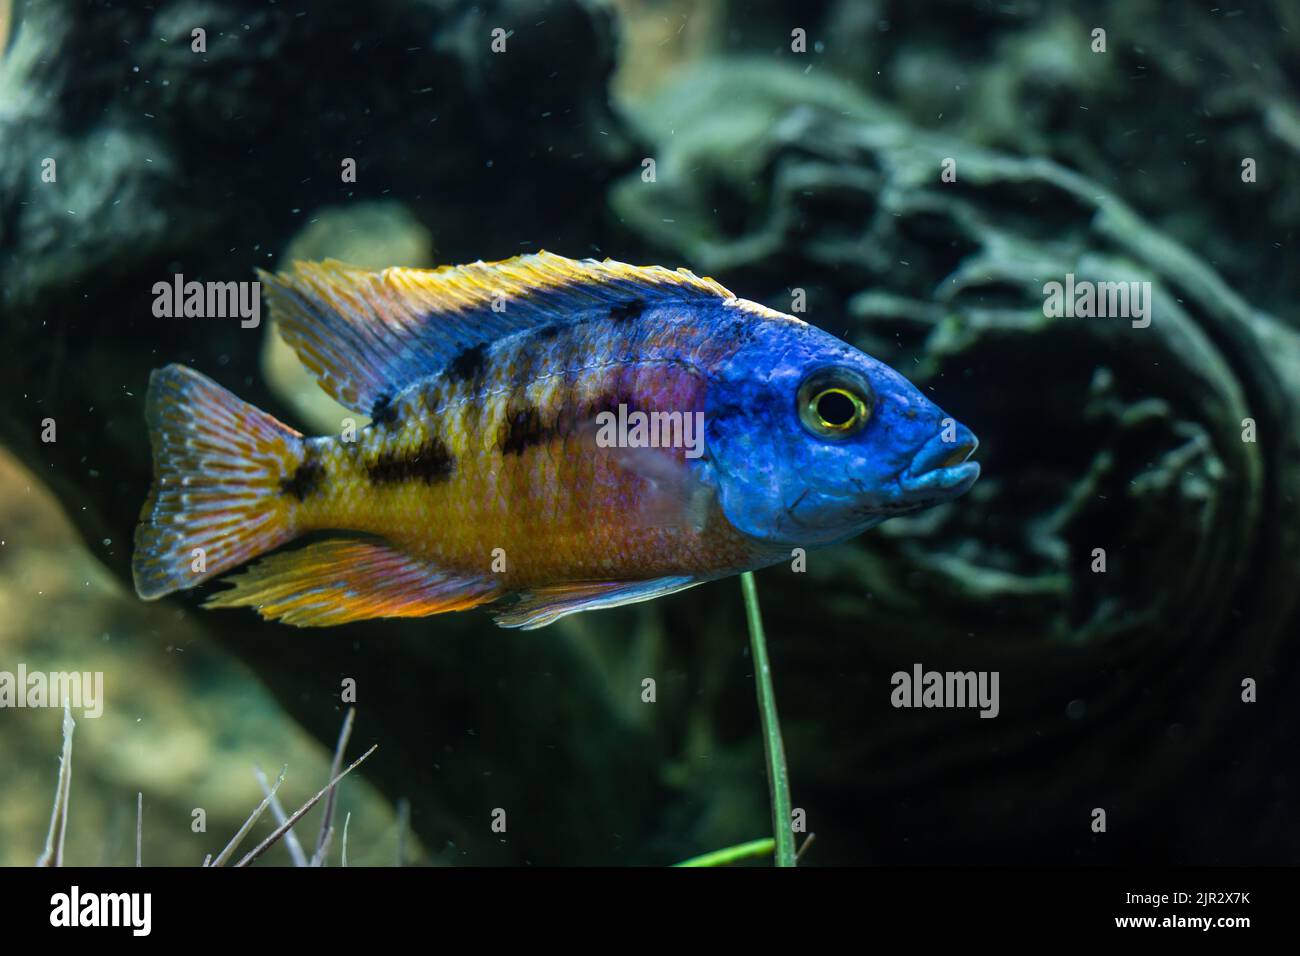 A closeup of a cute Protomelas taeniolatus fish in an aquarium Stock Photo